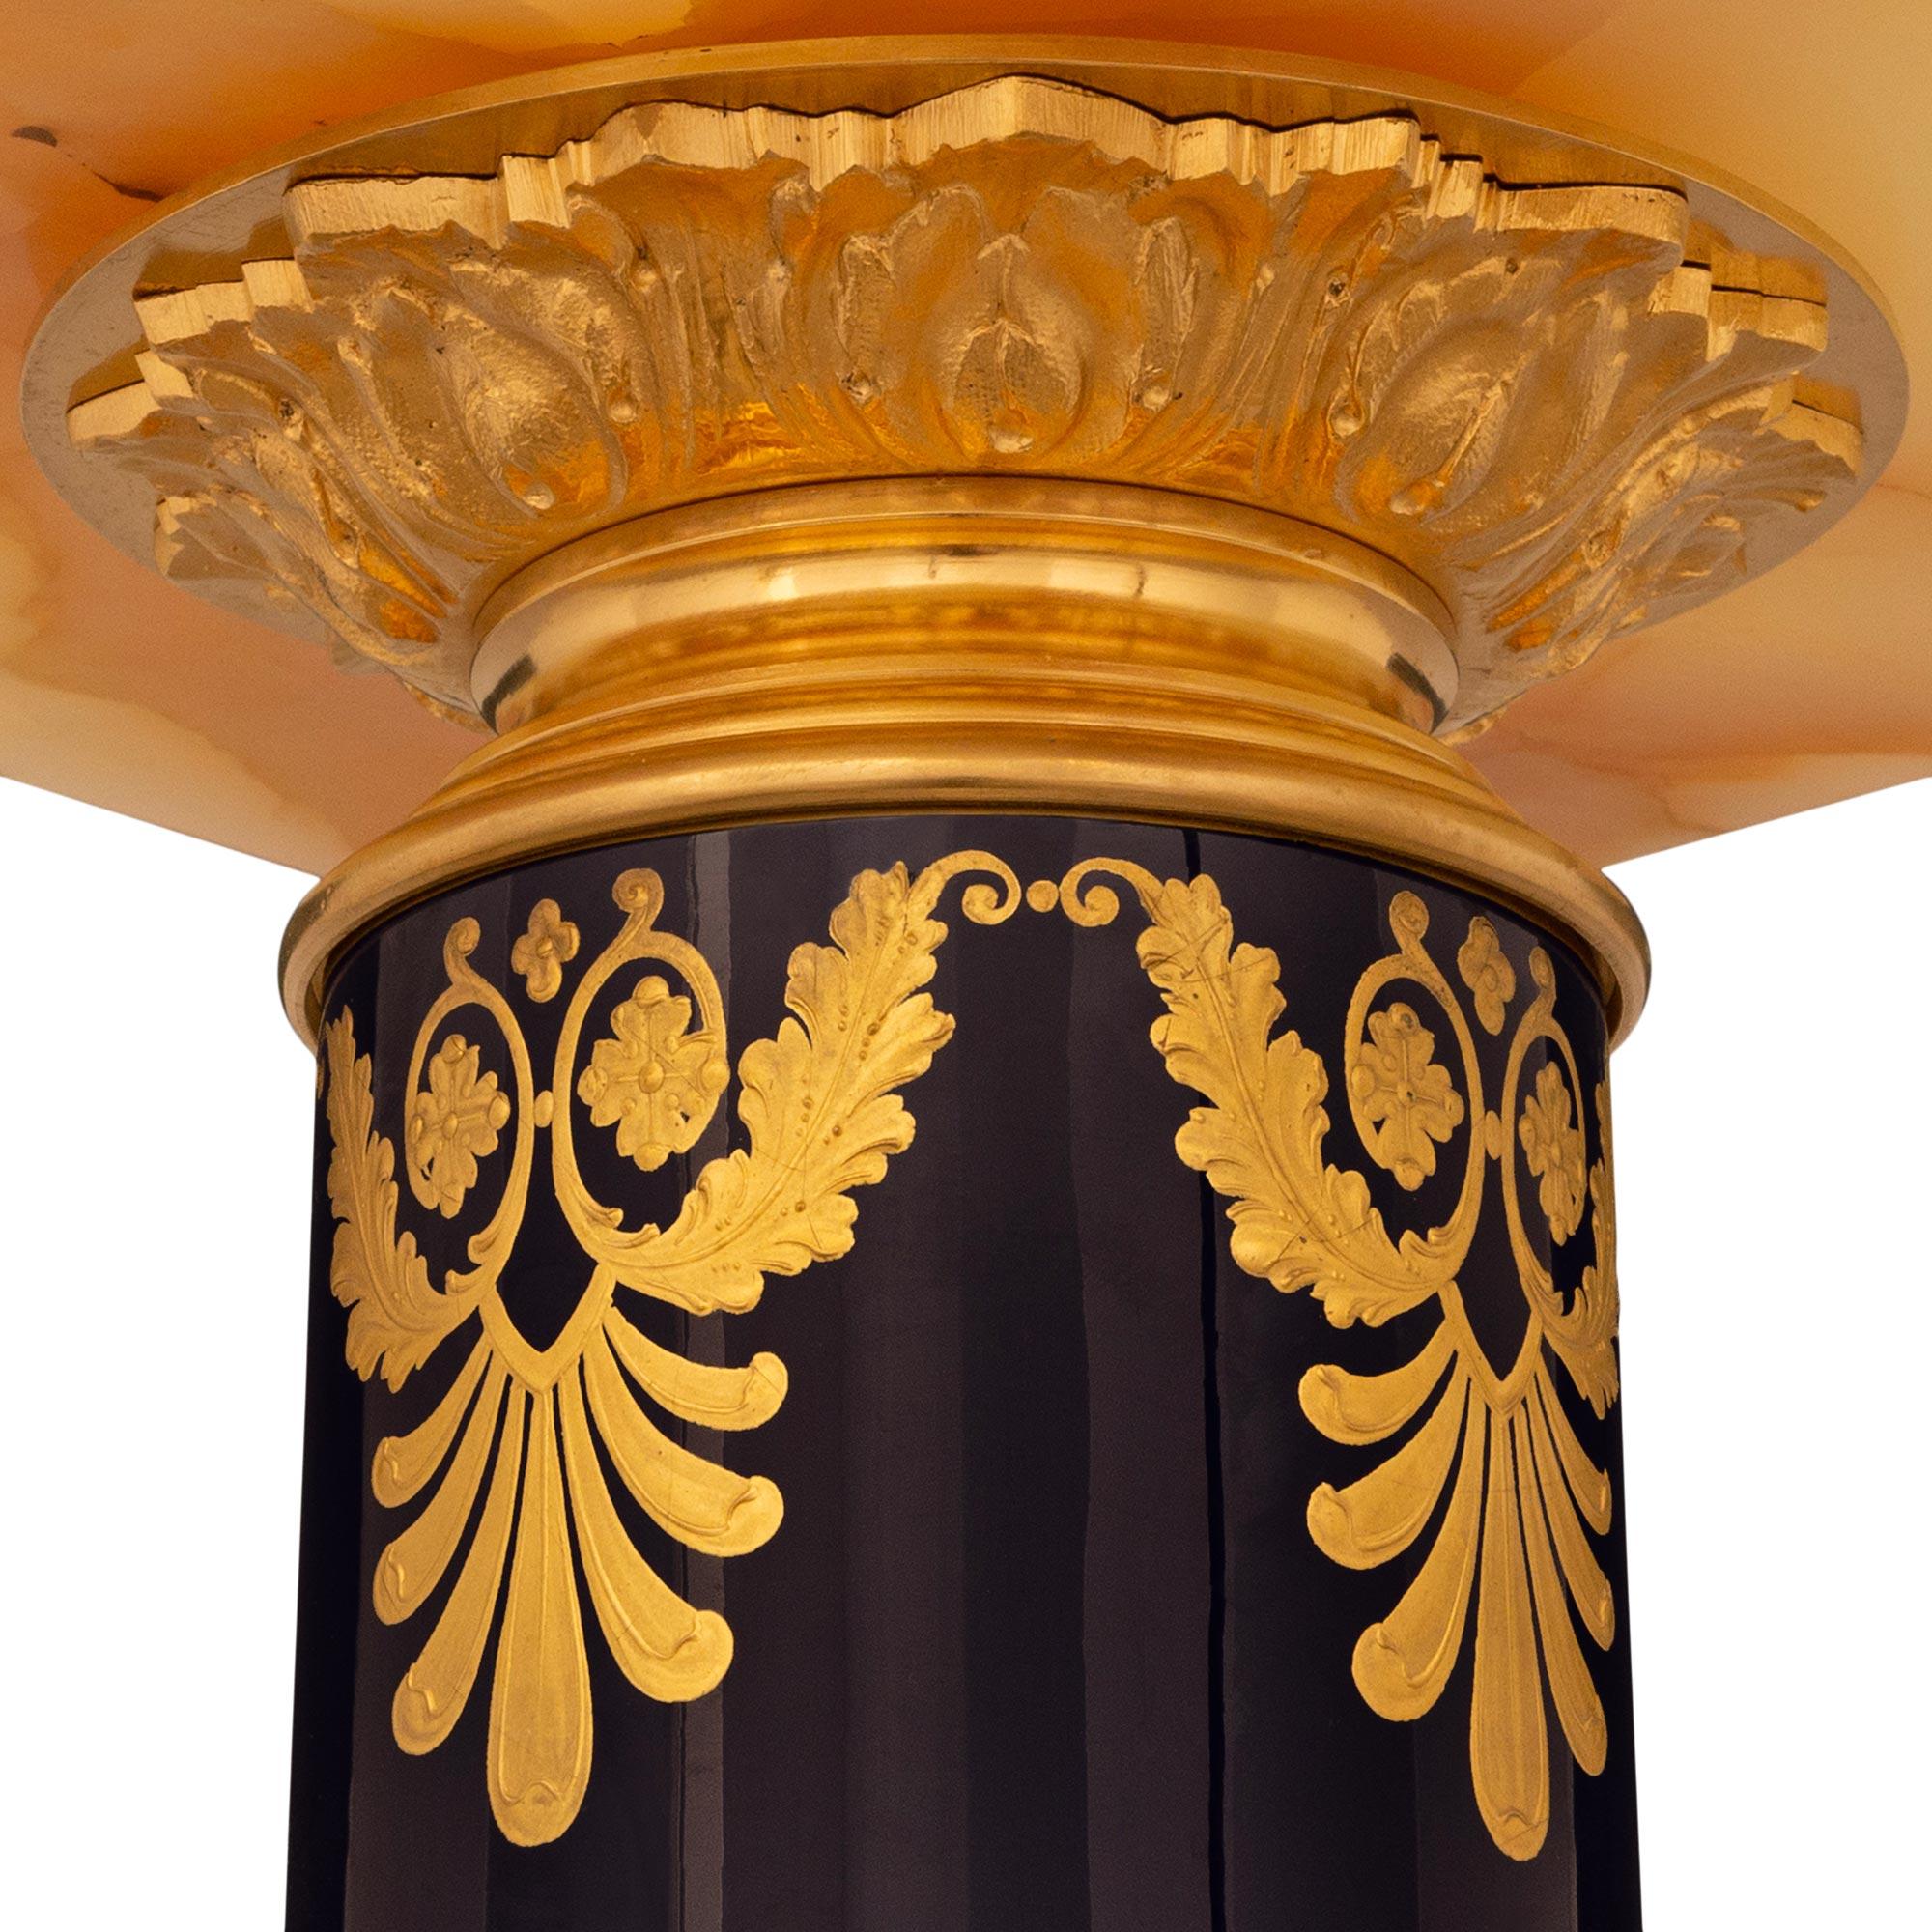 French 19th Century Empire St. Sèvres Porcelain, Gilt, Onyx, And Ormolu Pedestal For Sale 1